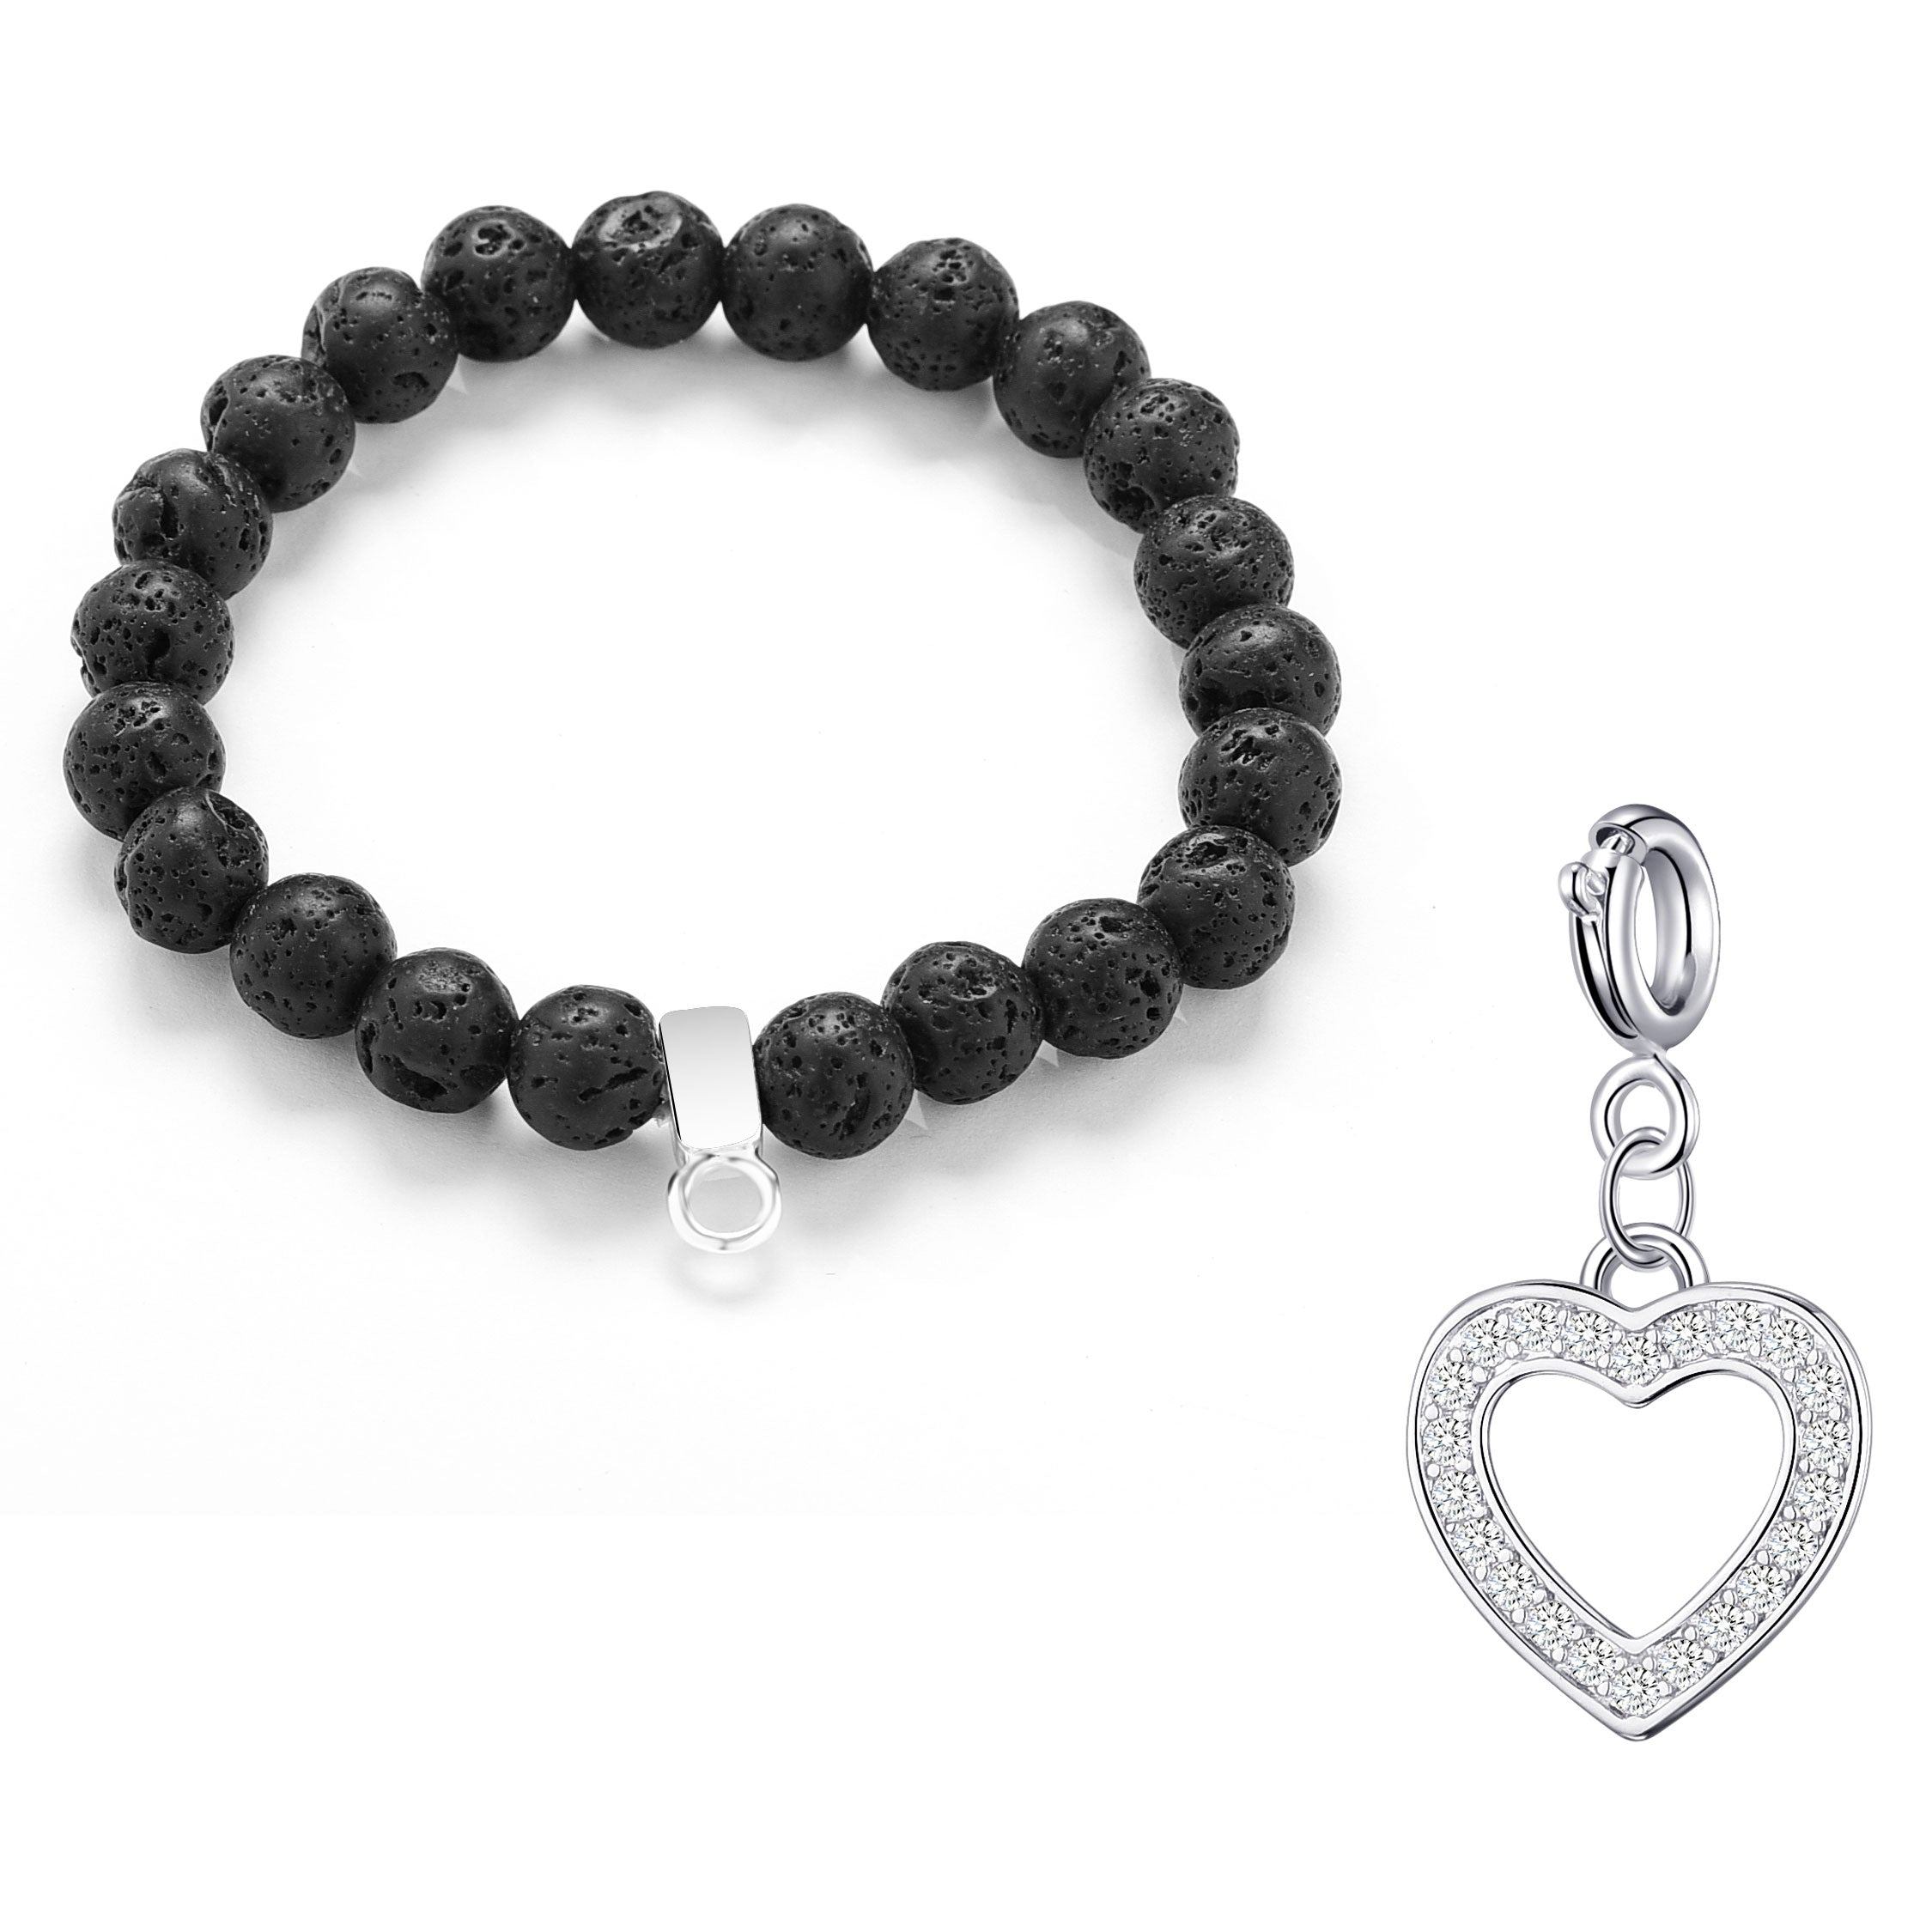 Lava Rock Gemstone Stretch Bracelet with Charm Created with Zircondia® Crystals